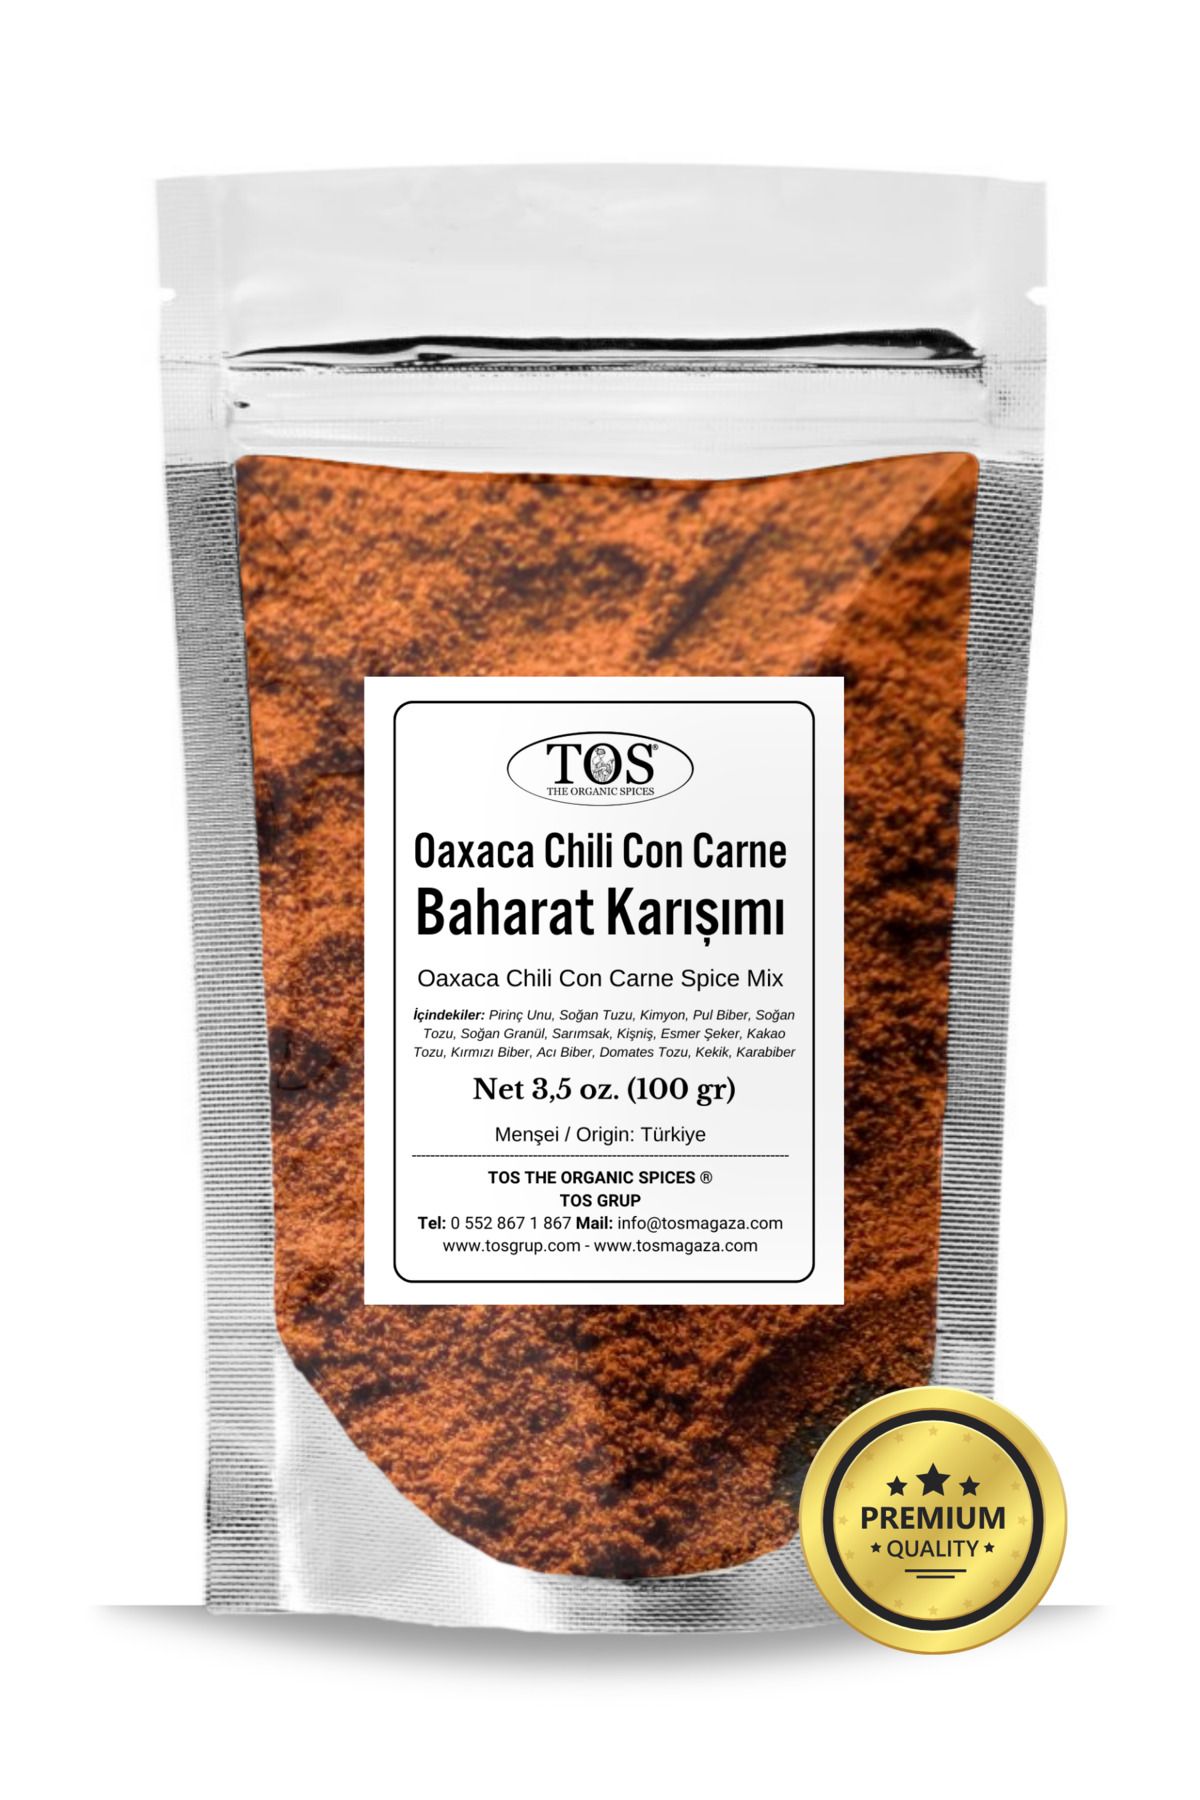 TOS The Organic Spices Oaxaca Chili Con Carne Baharat Karışımı 100 gr (1. Kalite)